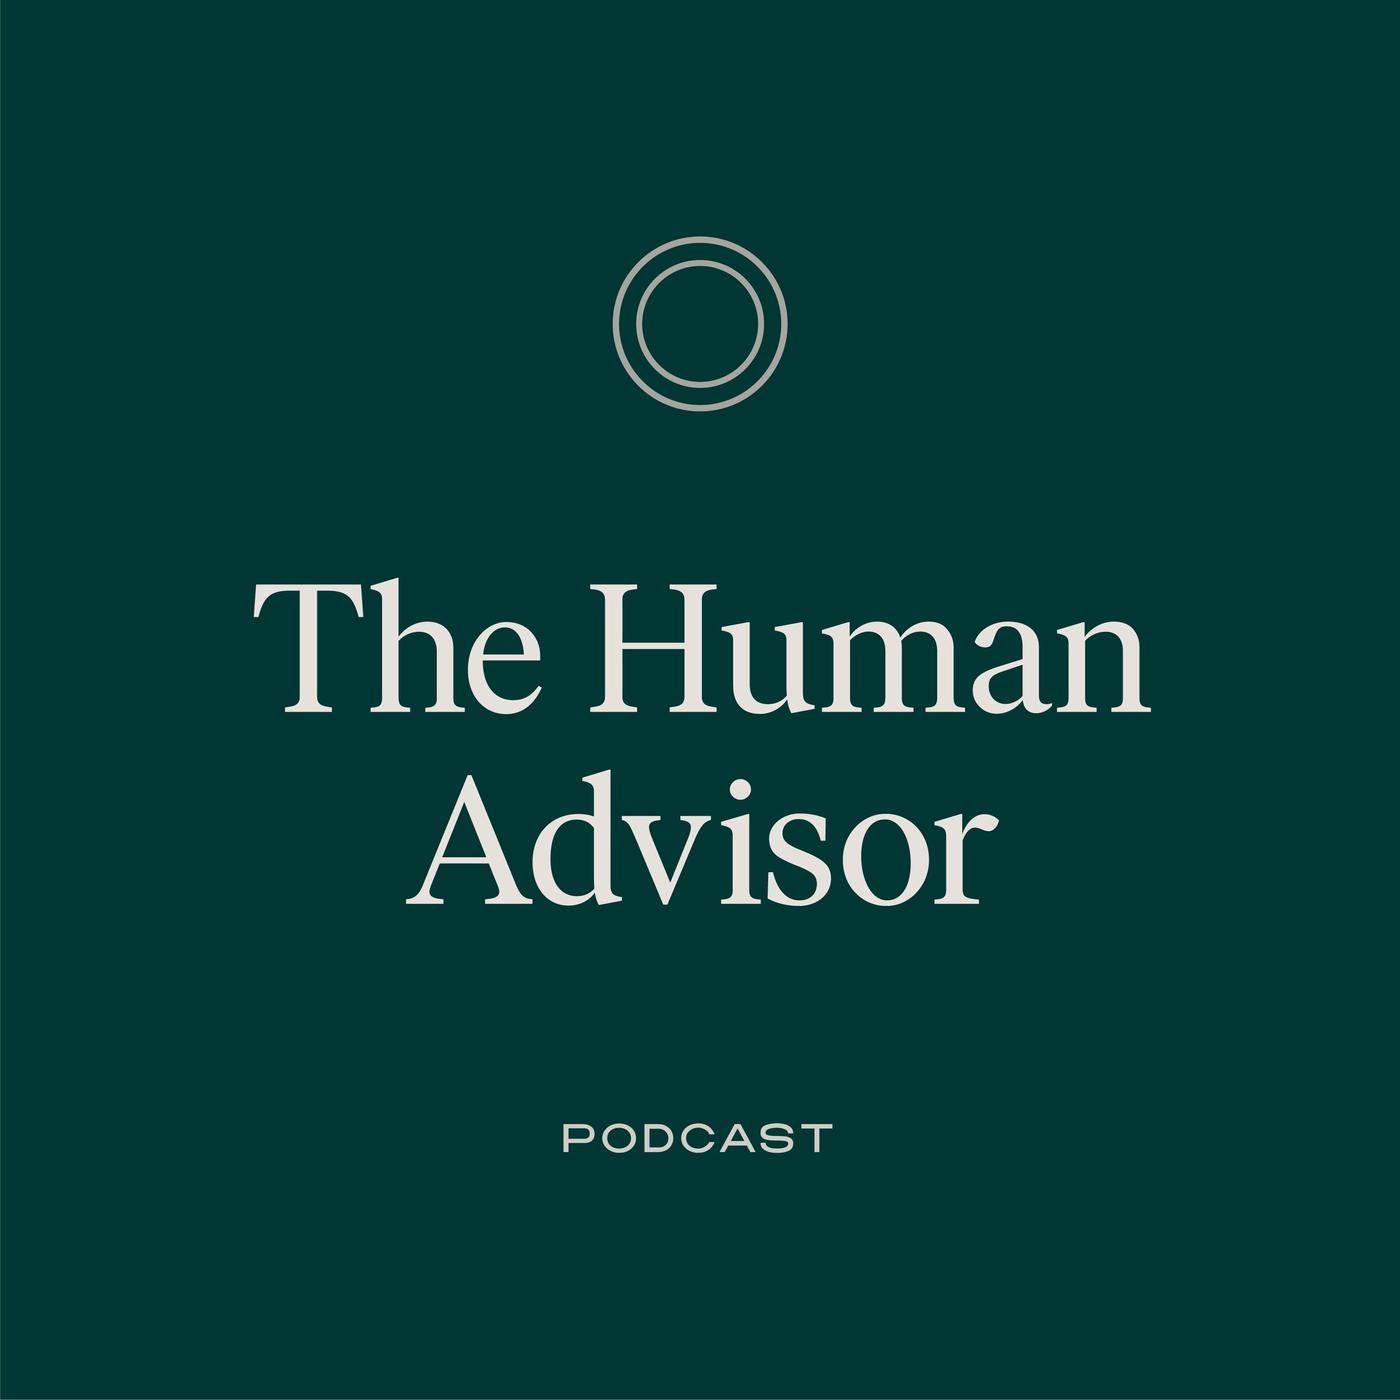 "The Human Advisor" logo